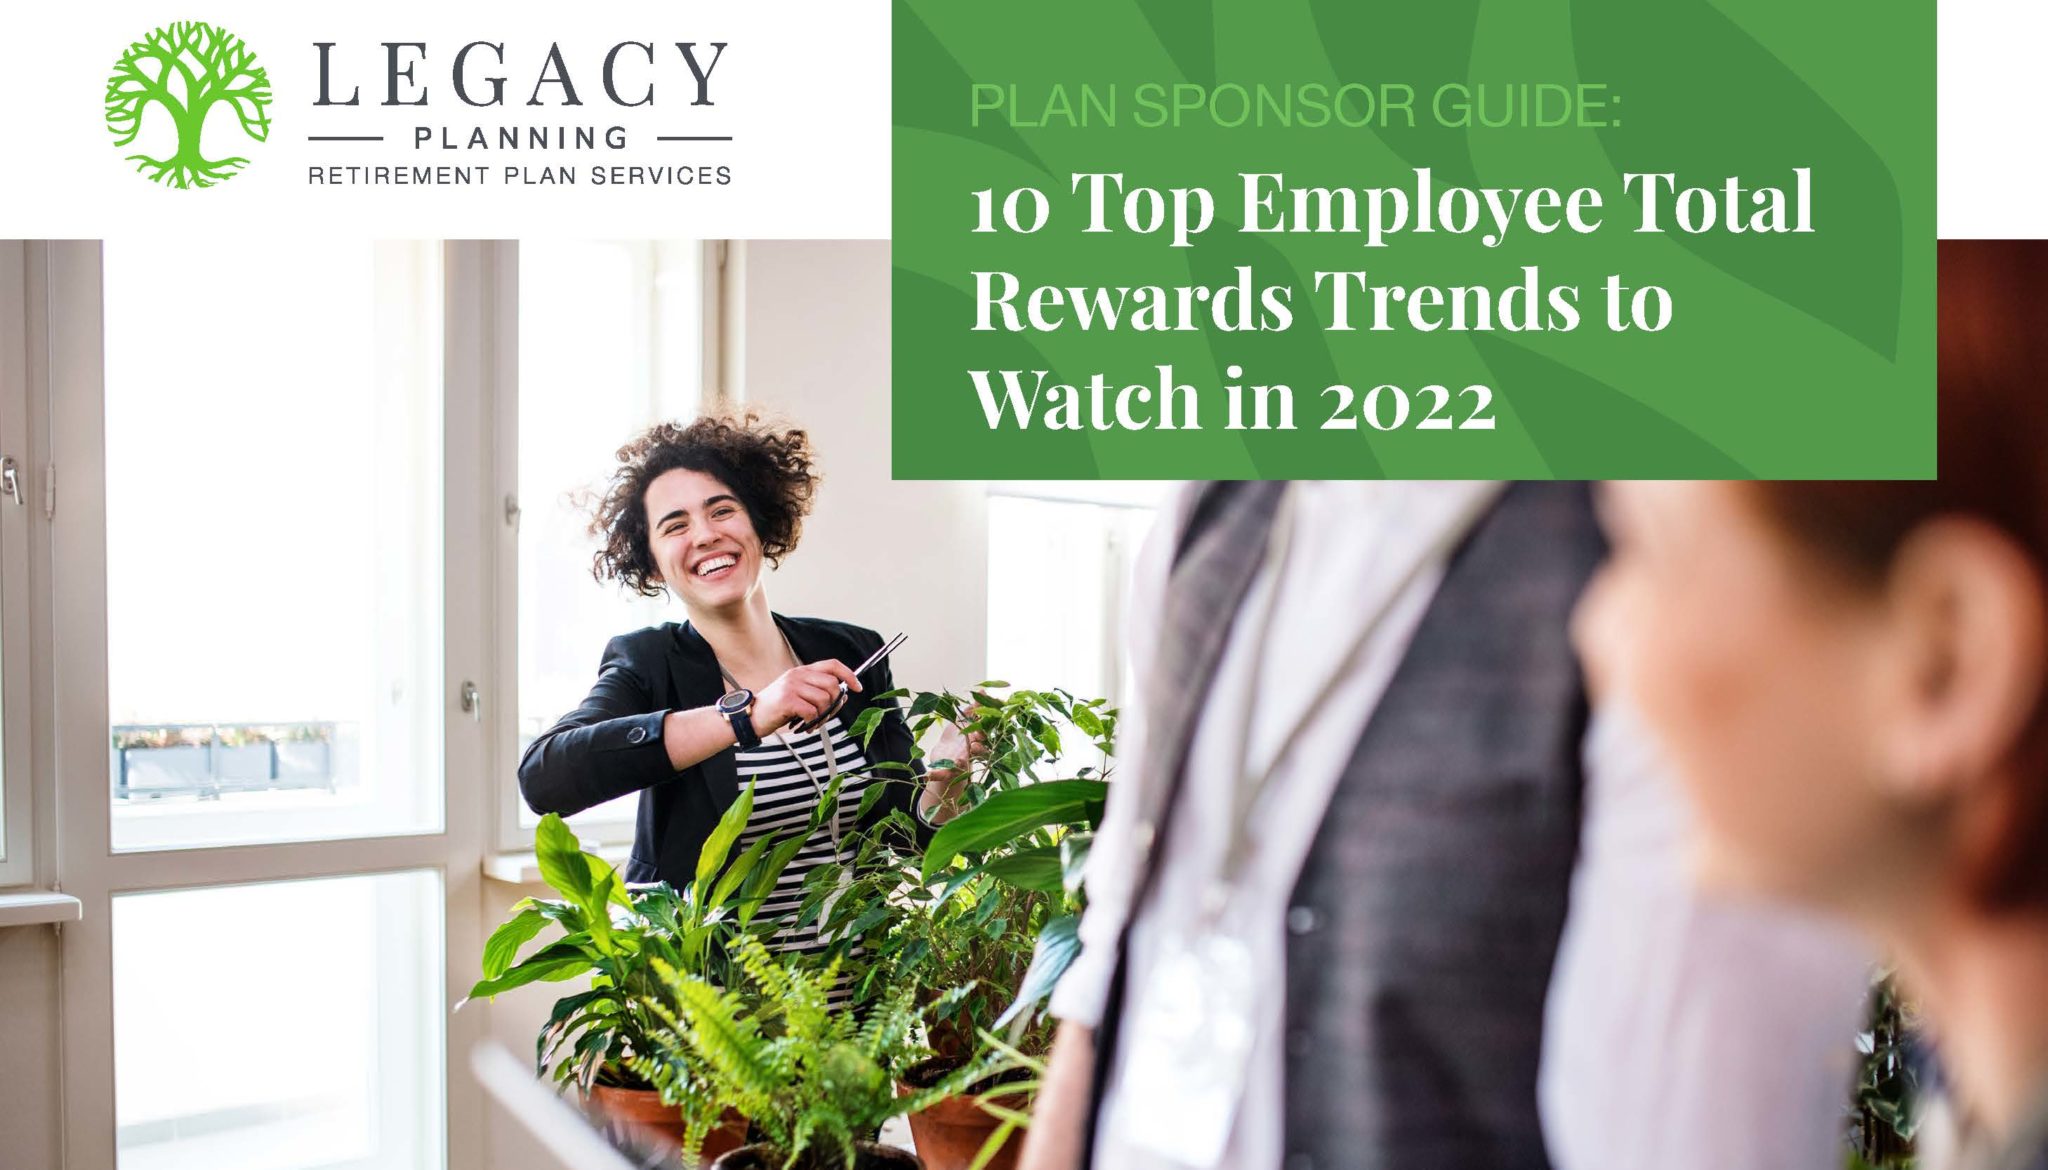 10 Top Employee Total Rewards Trends Legacy Planning